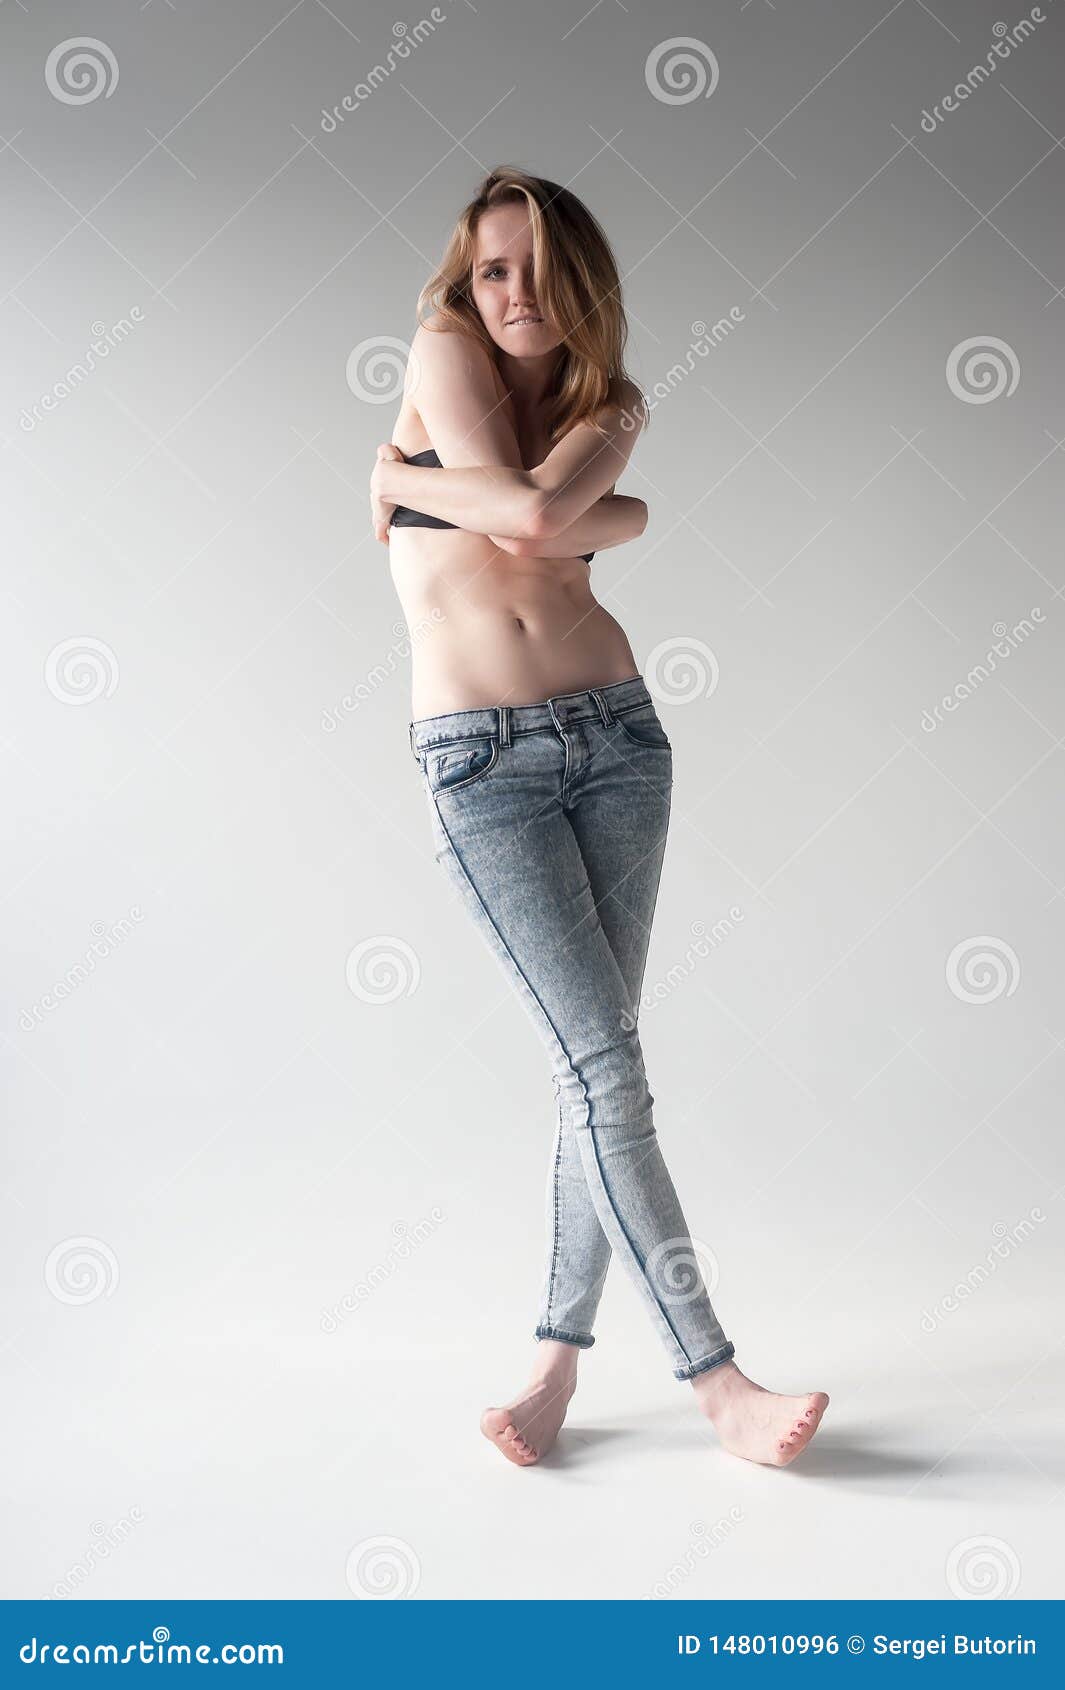 tight jeans hot girl selfie